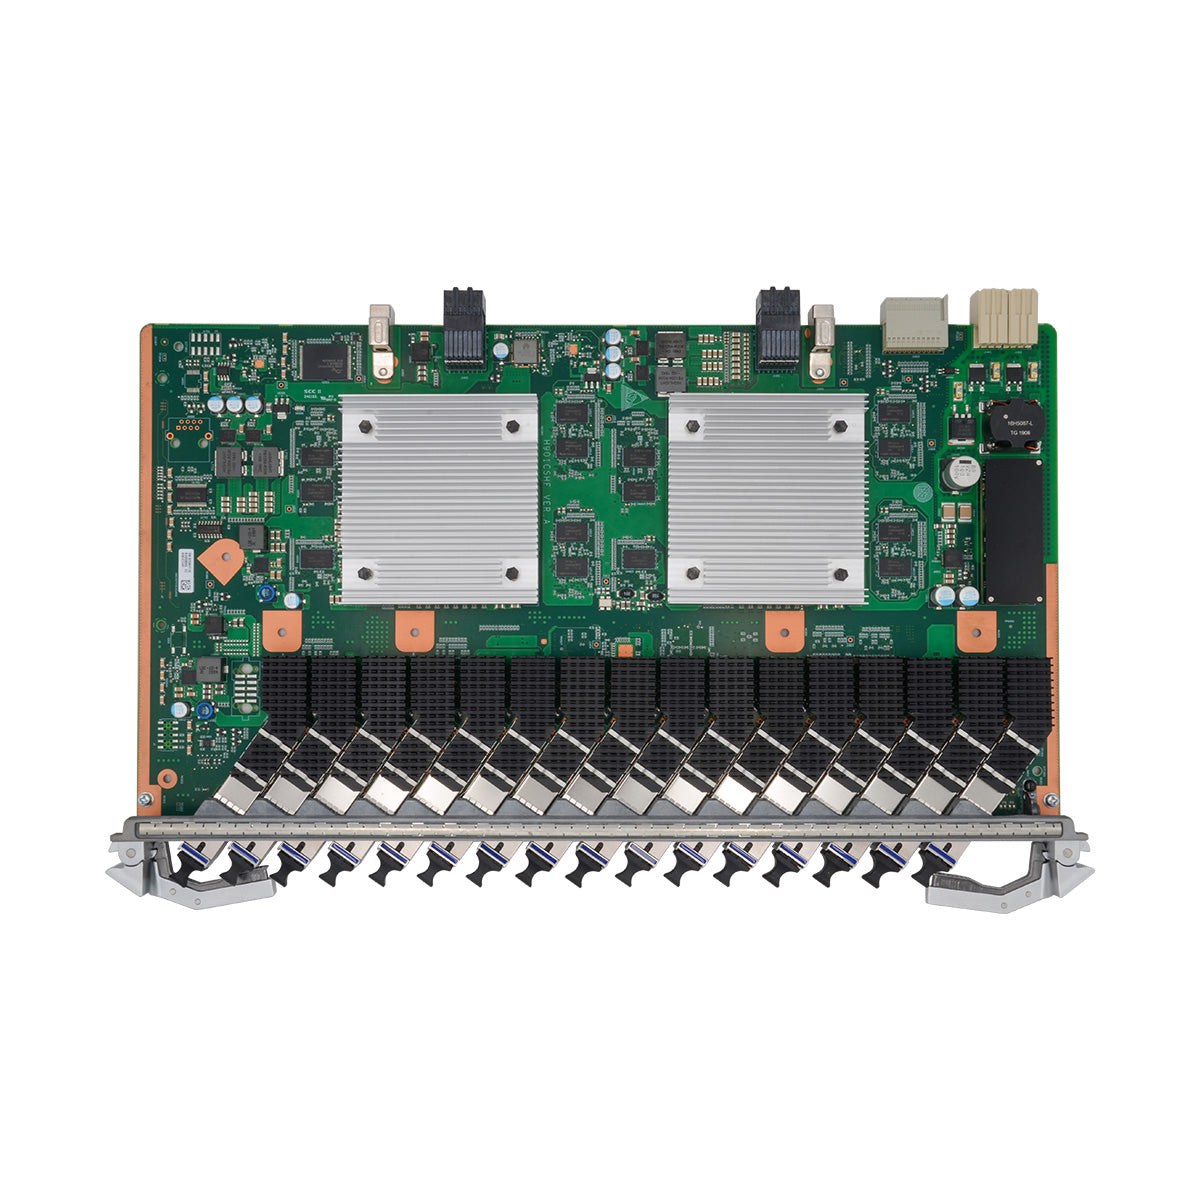 Huawei H901CGHF 16-port XG-PON and GPON combo Board for MA5800 series OLT